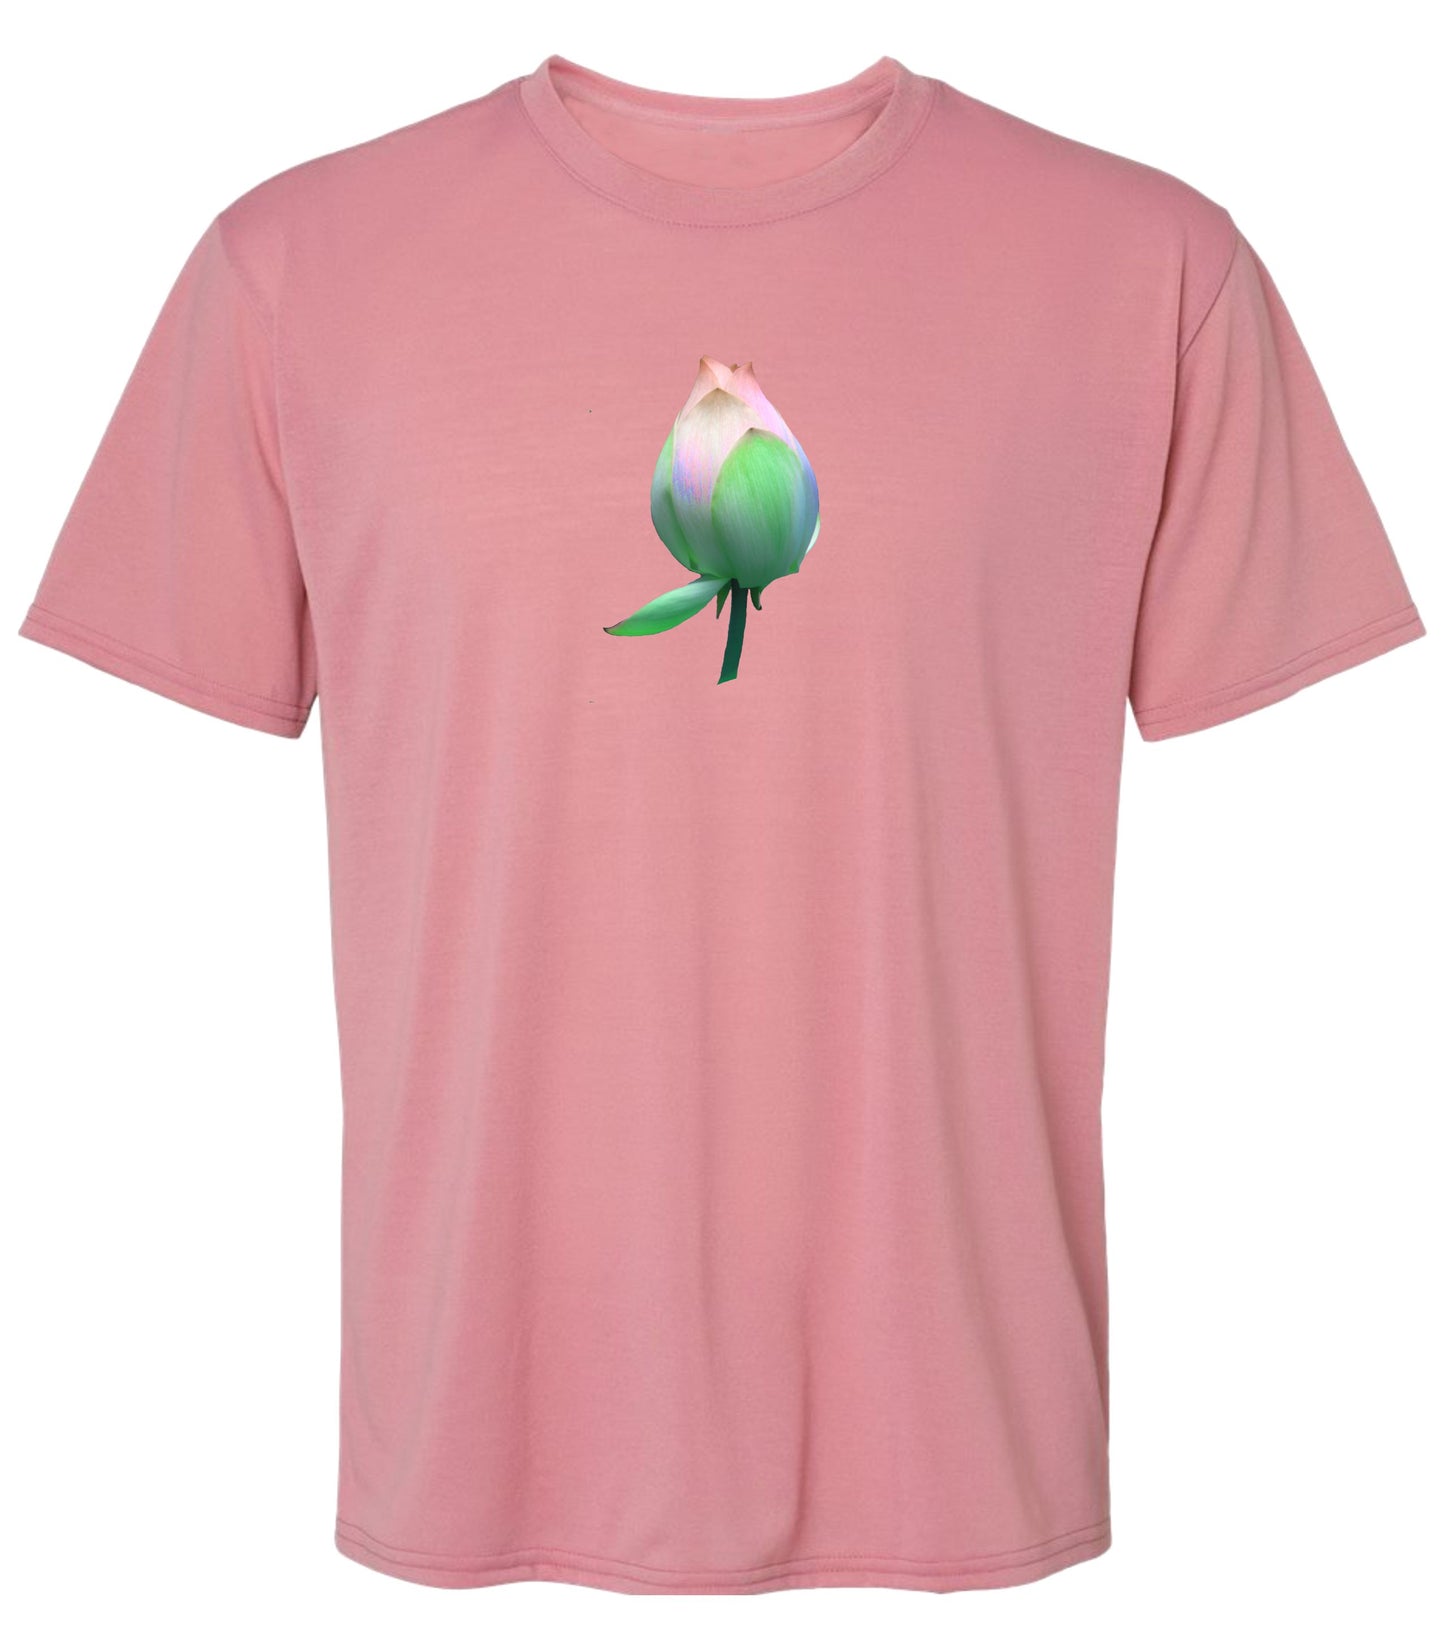 25LCP Lotus Blossom Short Sleeve Shirt Gardening Shirt Casual Shirt Lake Shirt Outdoor Shirt